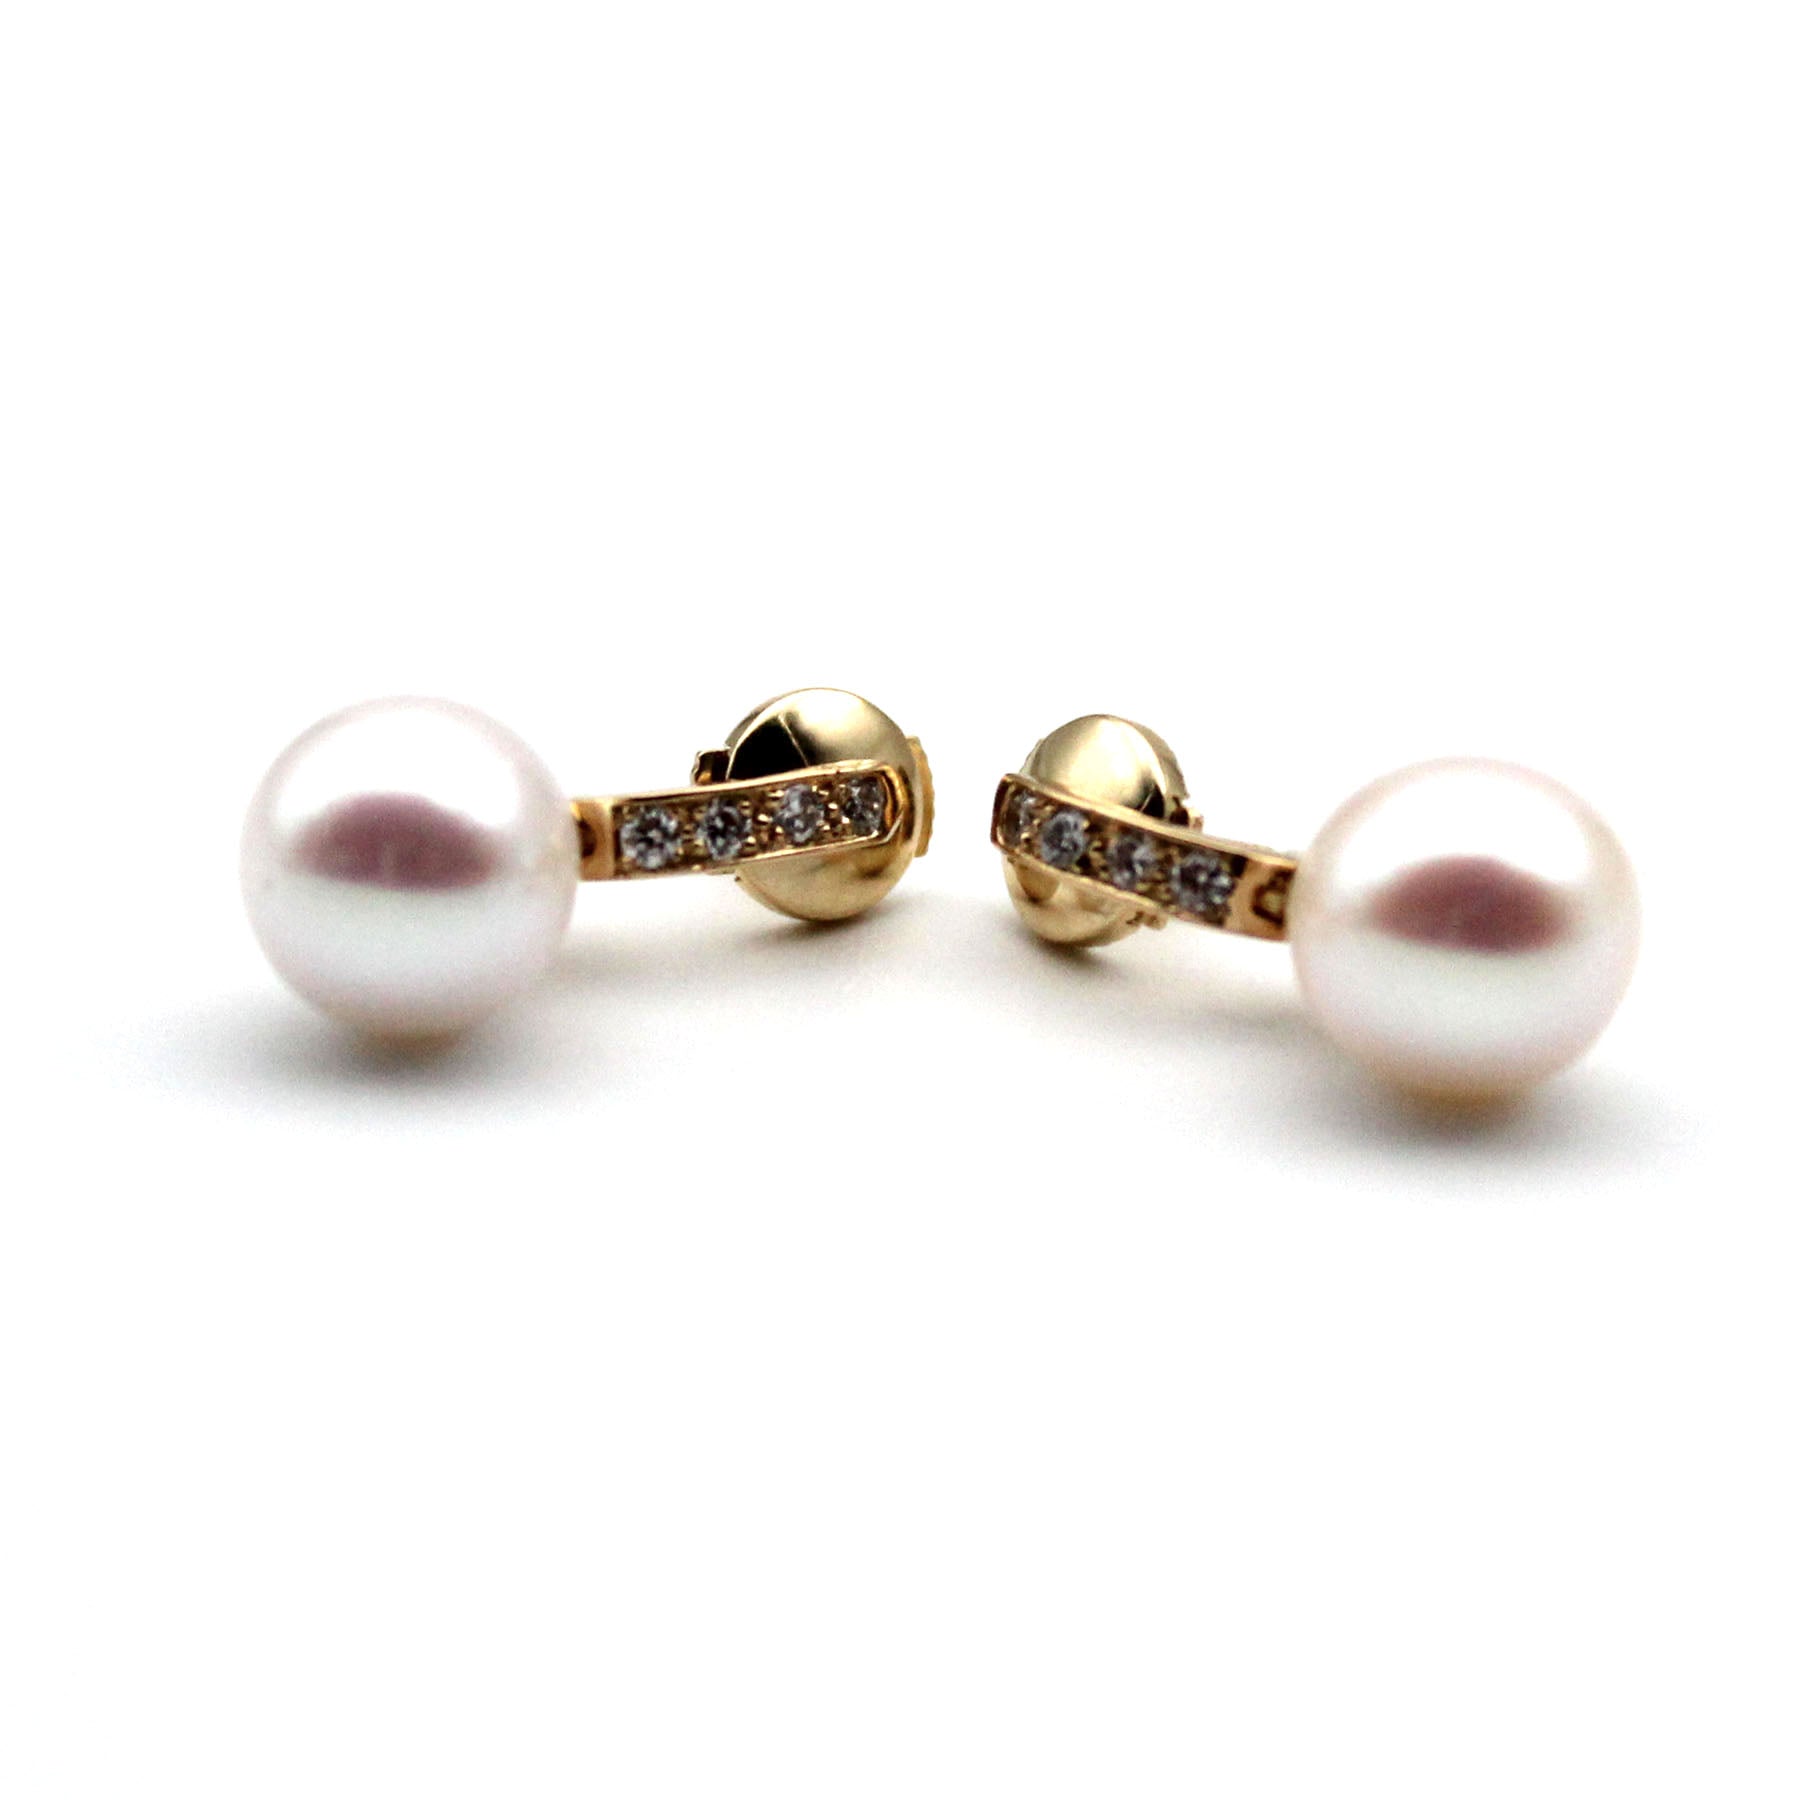 Cultured pearl earrings